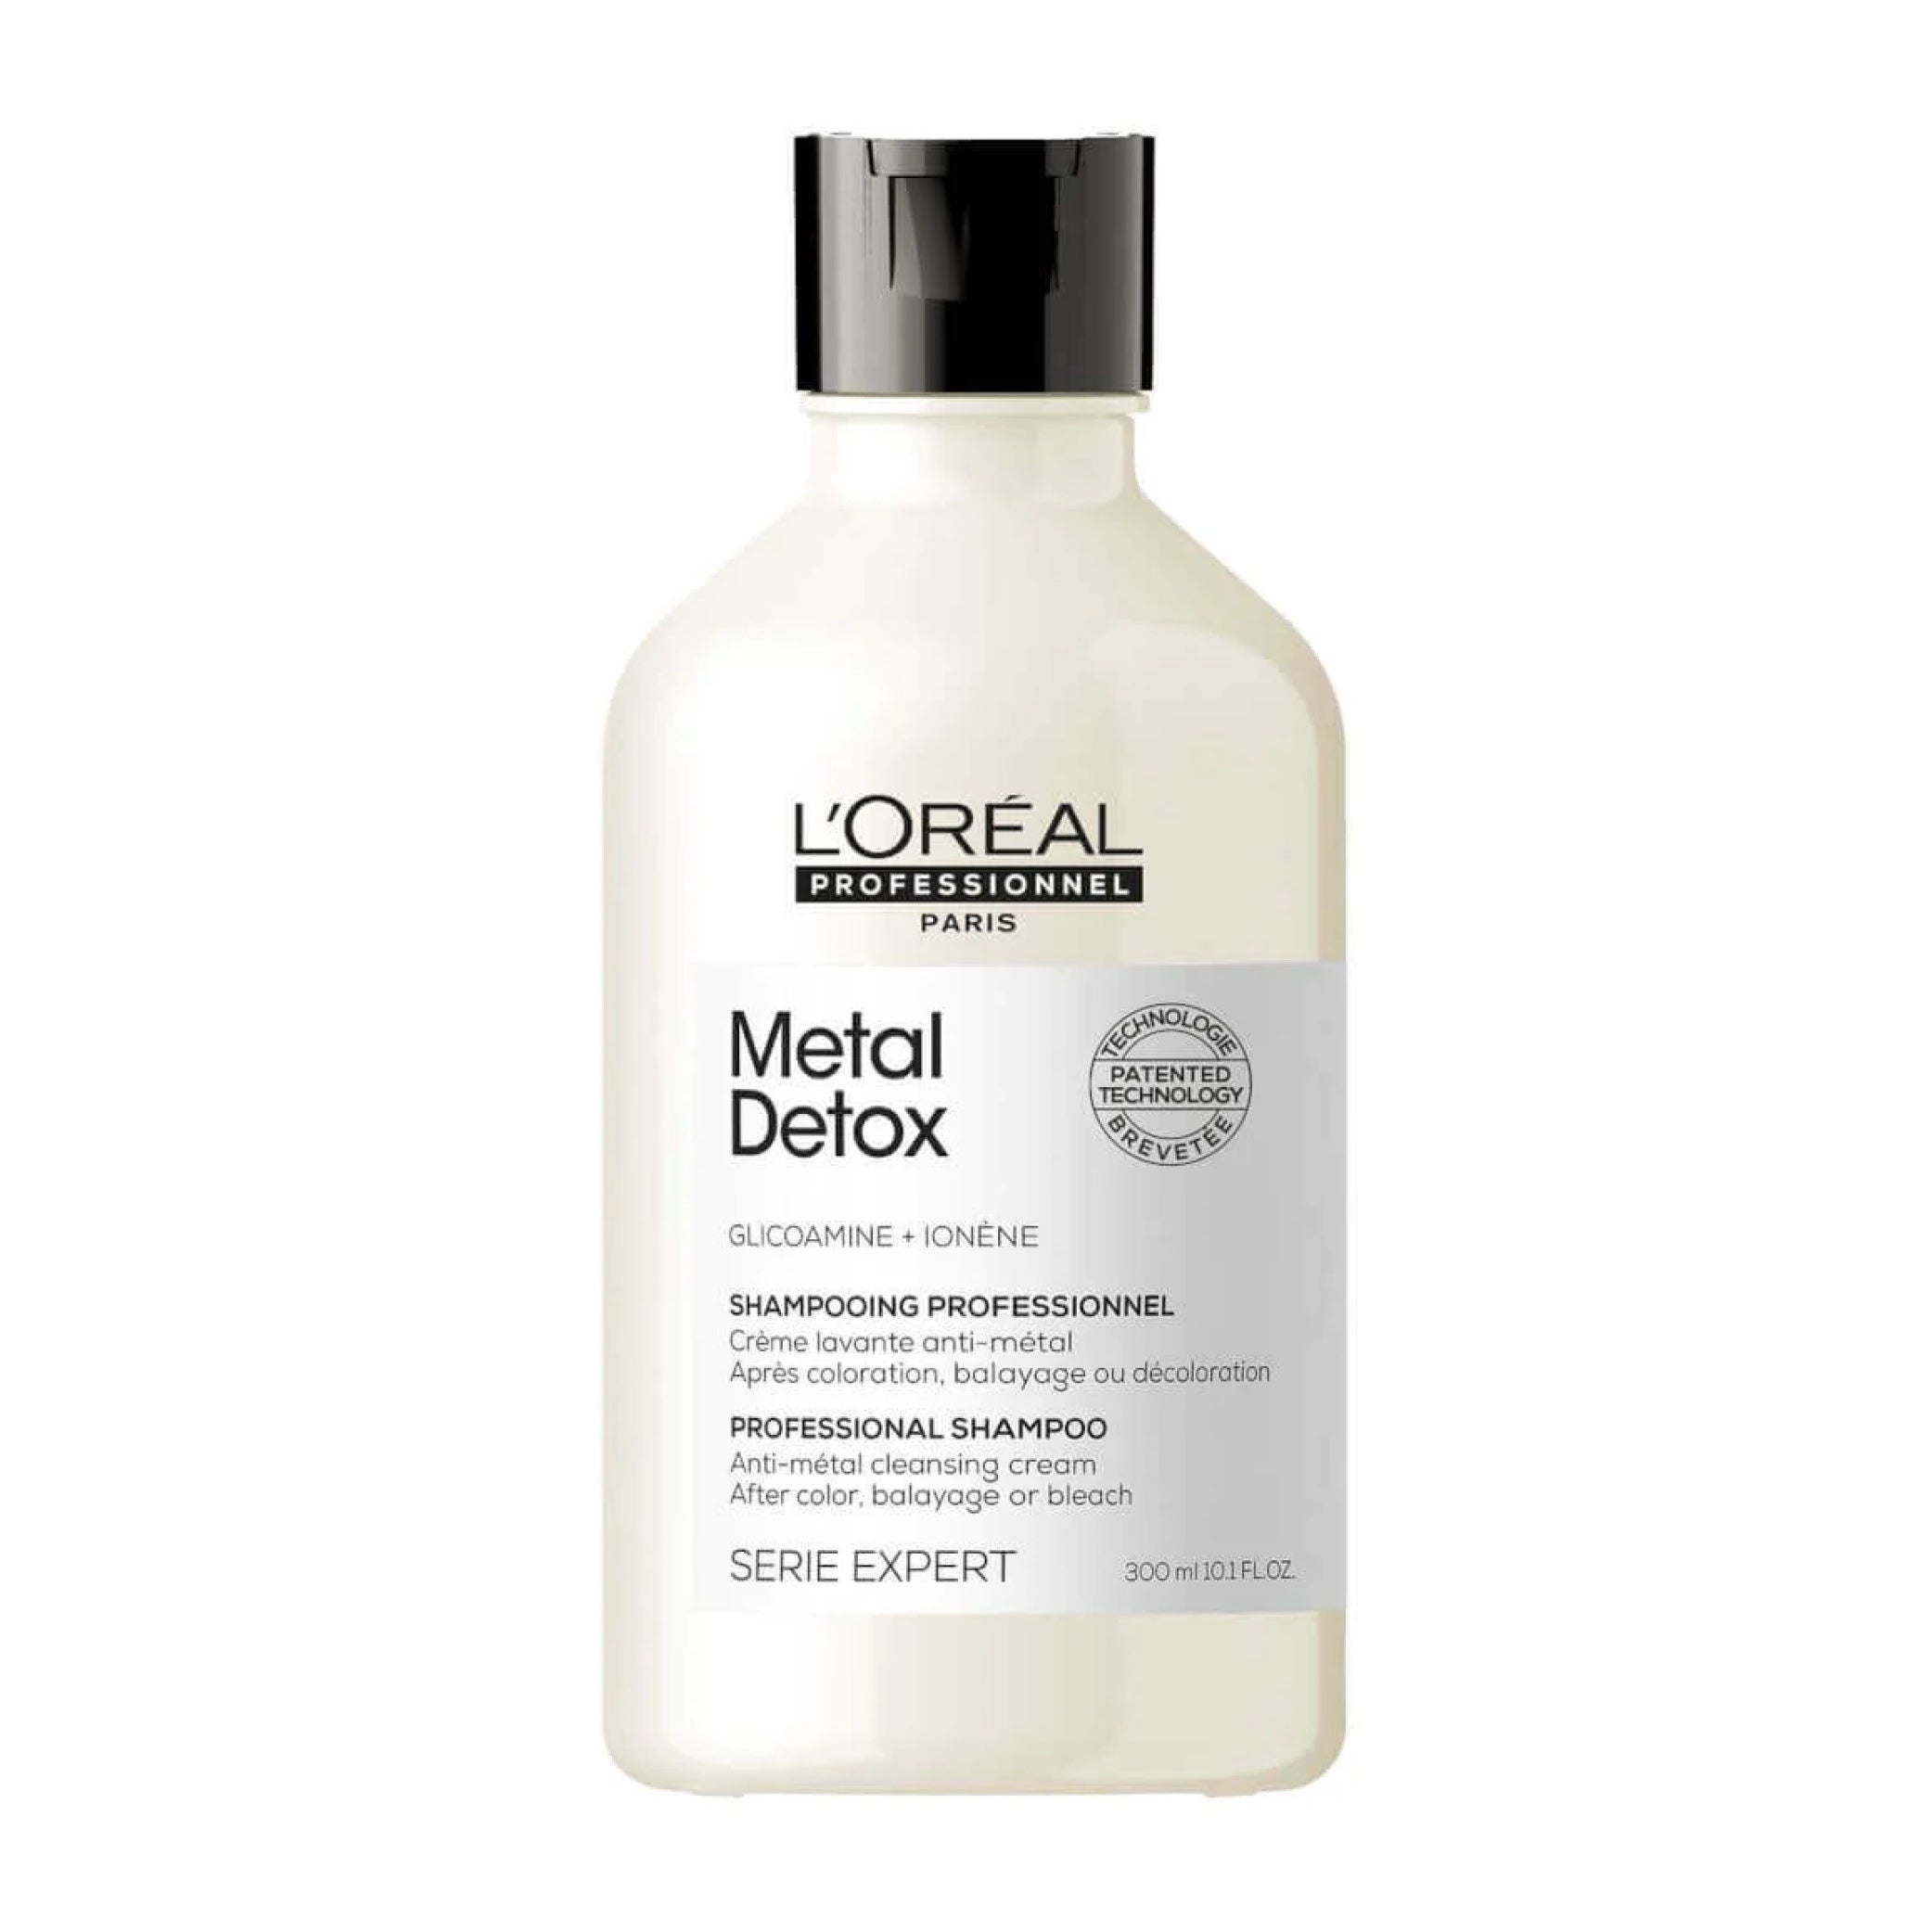 Metal Detox Anti-metal cleansing cream shampoo